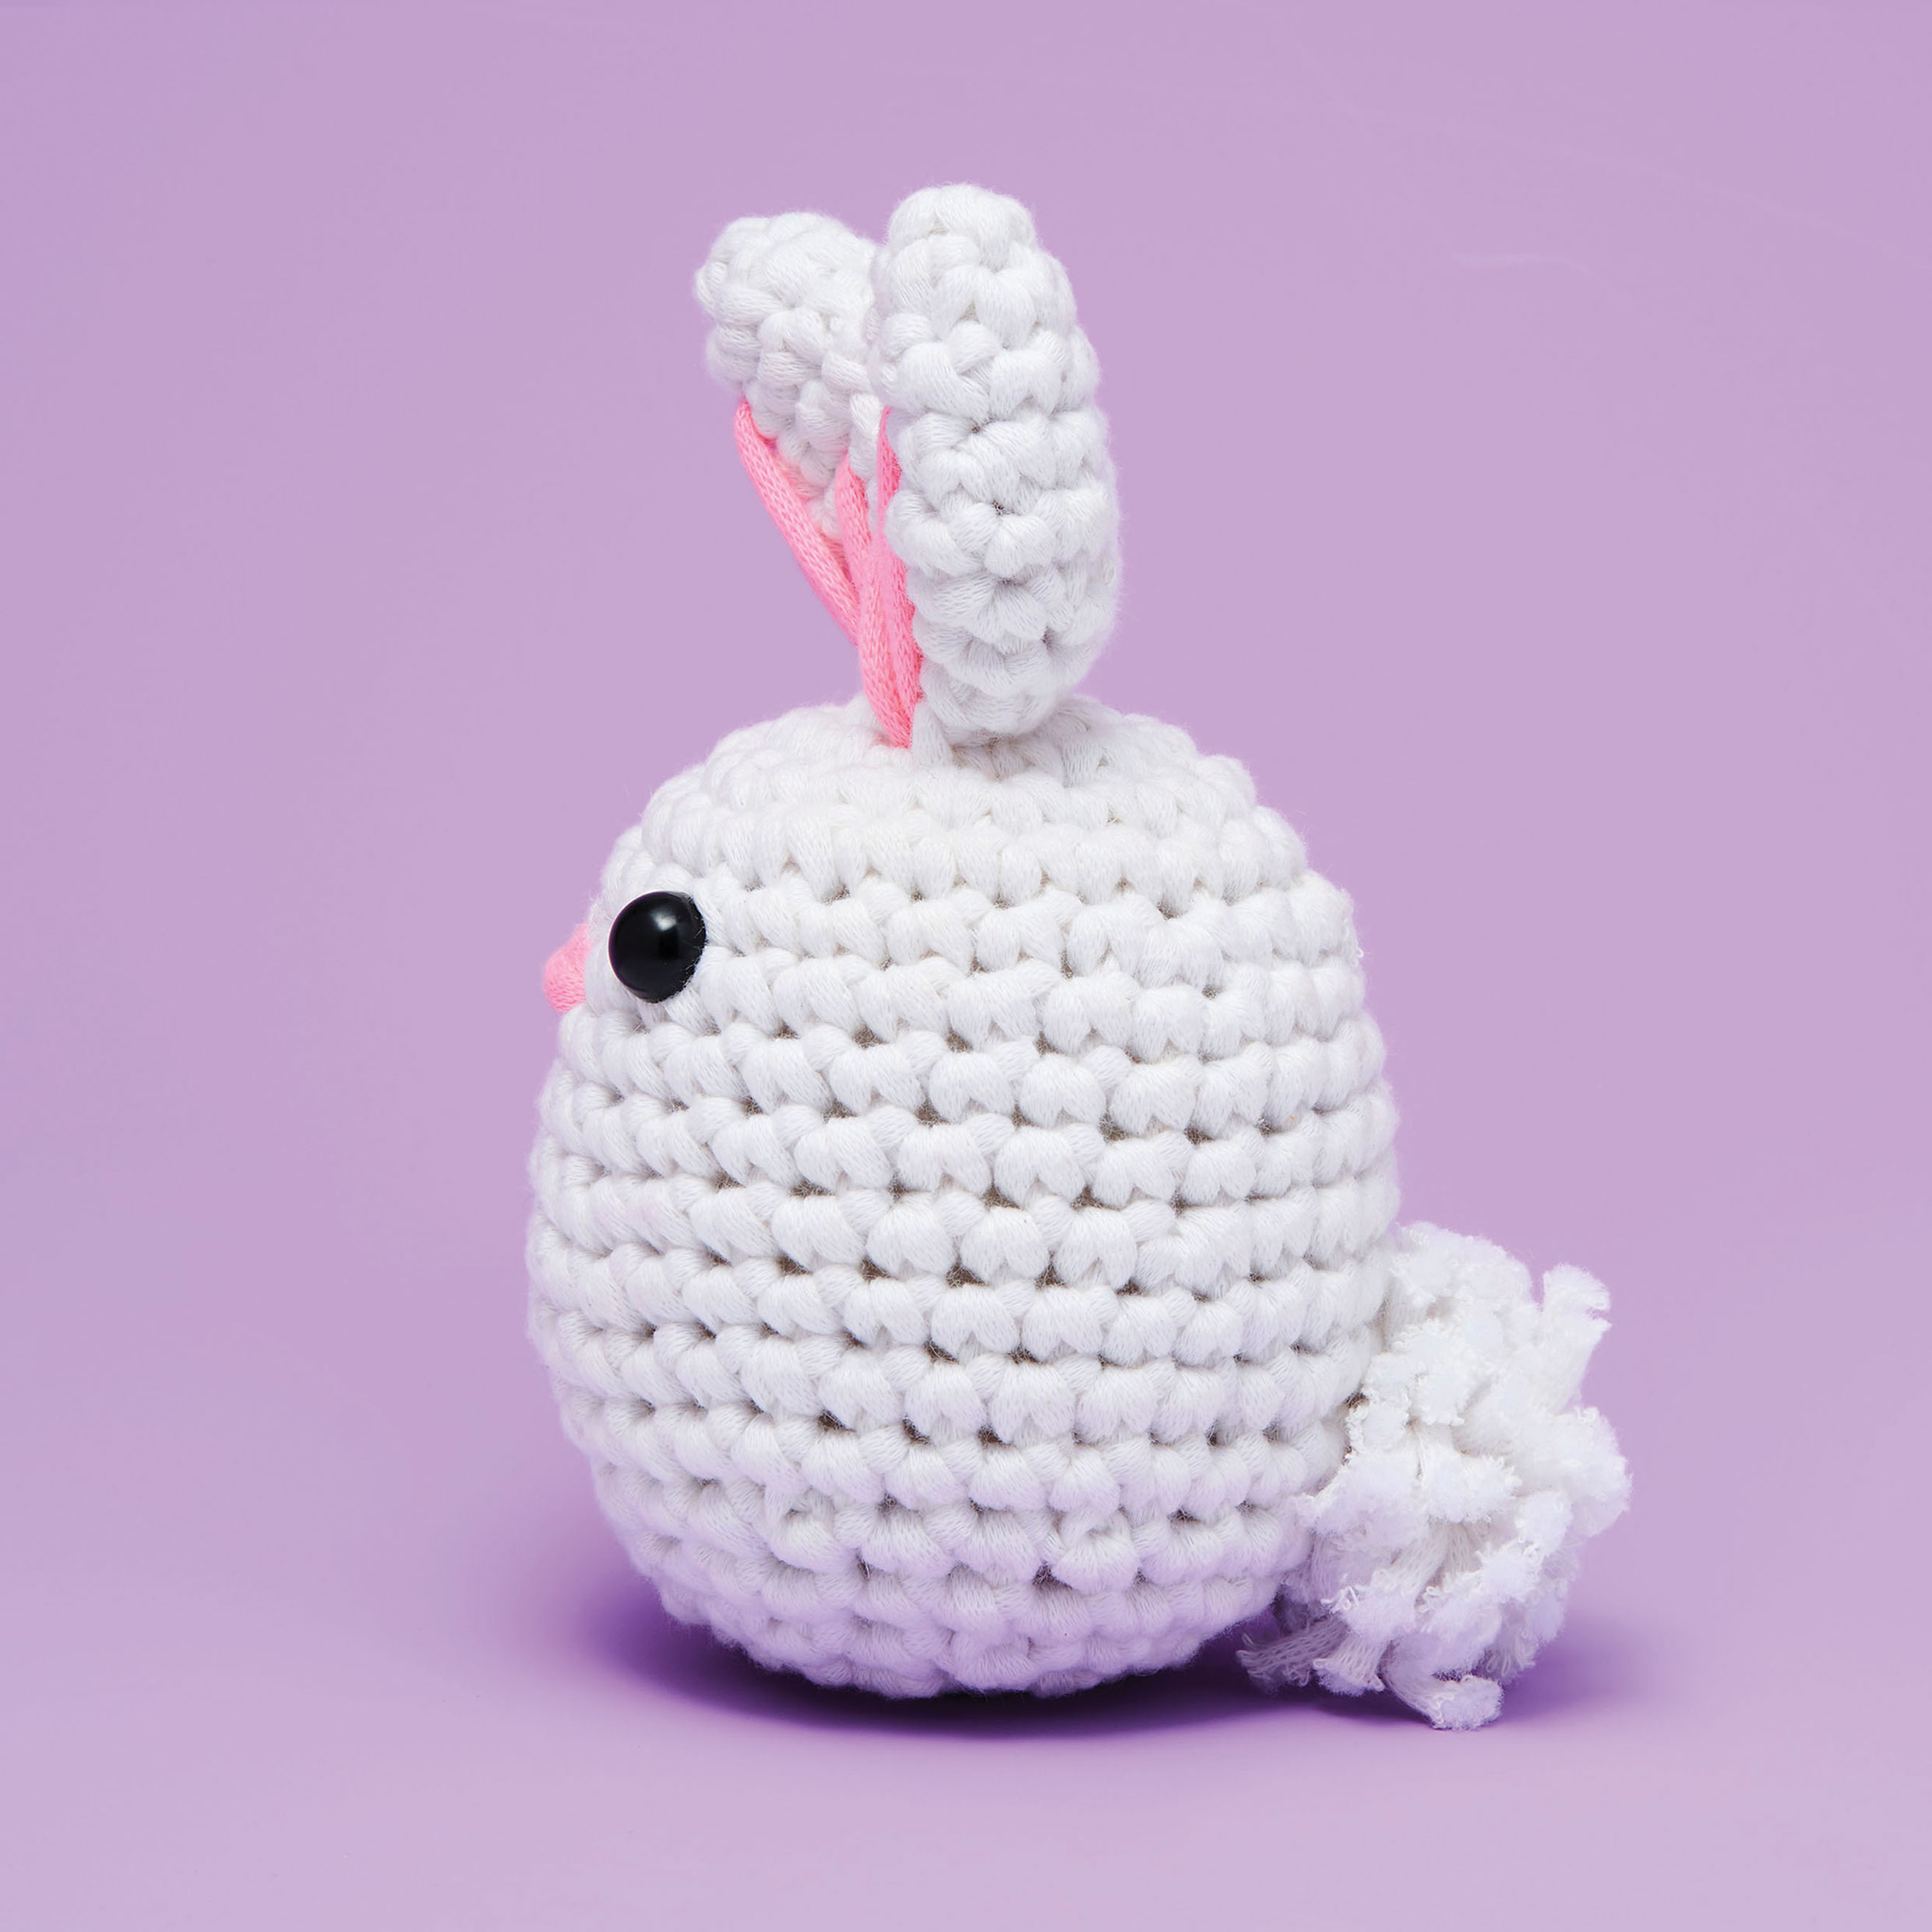 The Woobles Beginner Crochet Amigurumi Kits